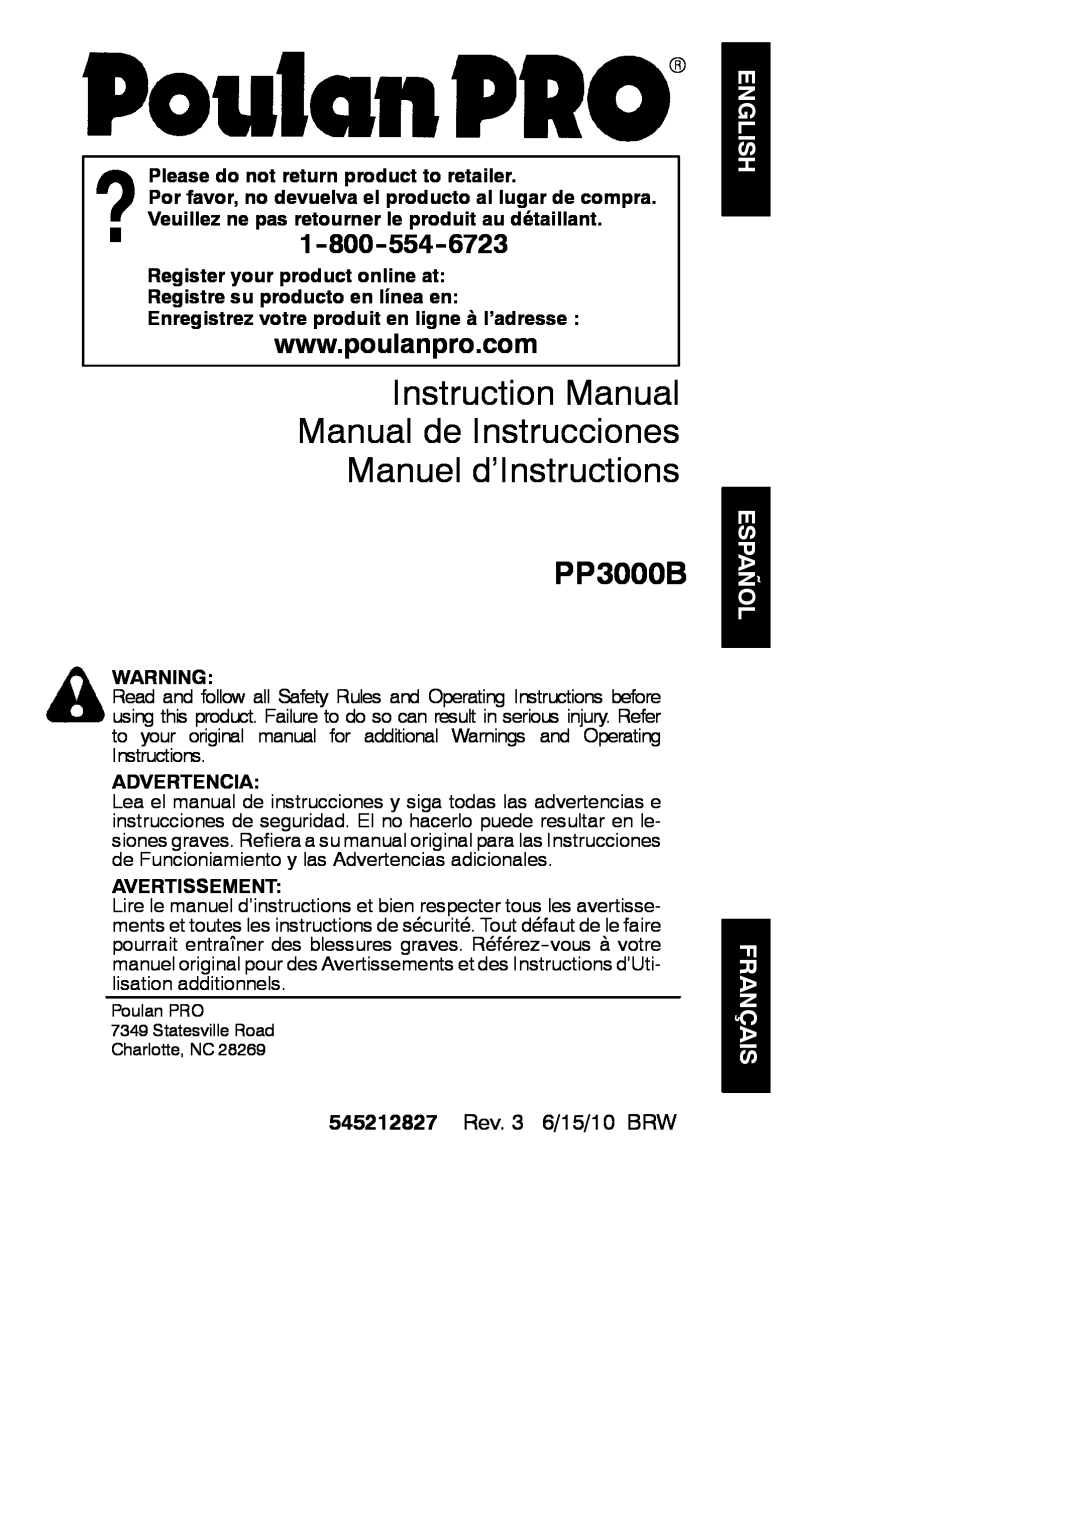 Poulan 952711609 instruction manual English Español Français, Manuel d’Instructions, PP3000B, 545212827 Rev. 3 6/15/10 BRW 